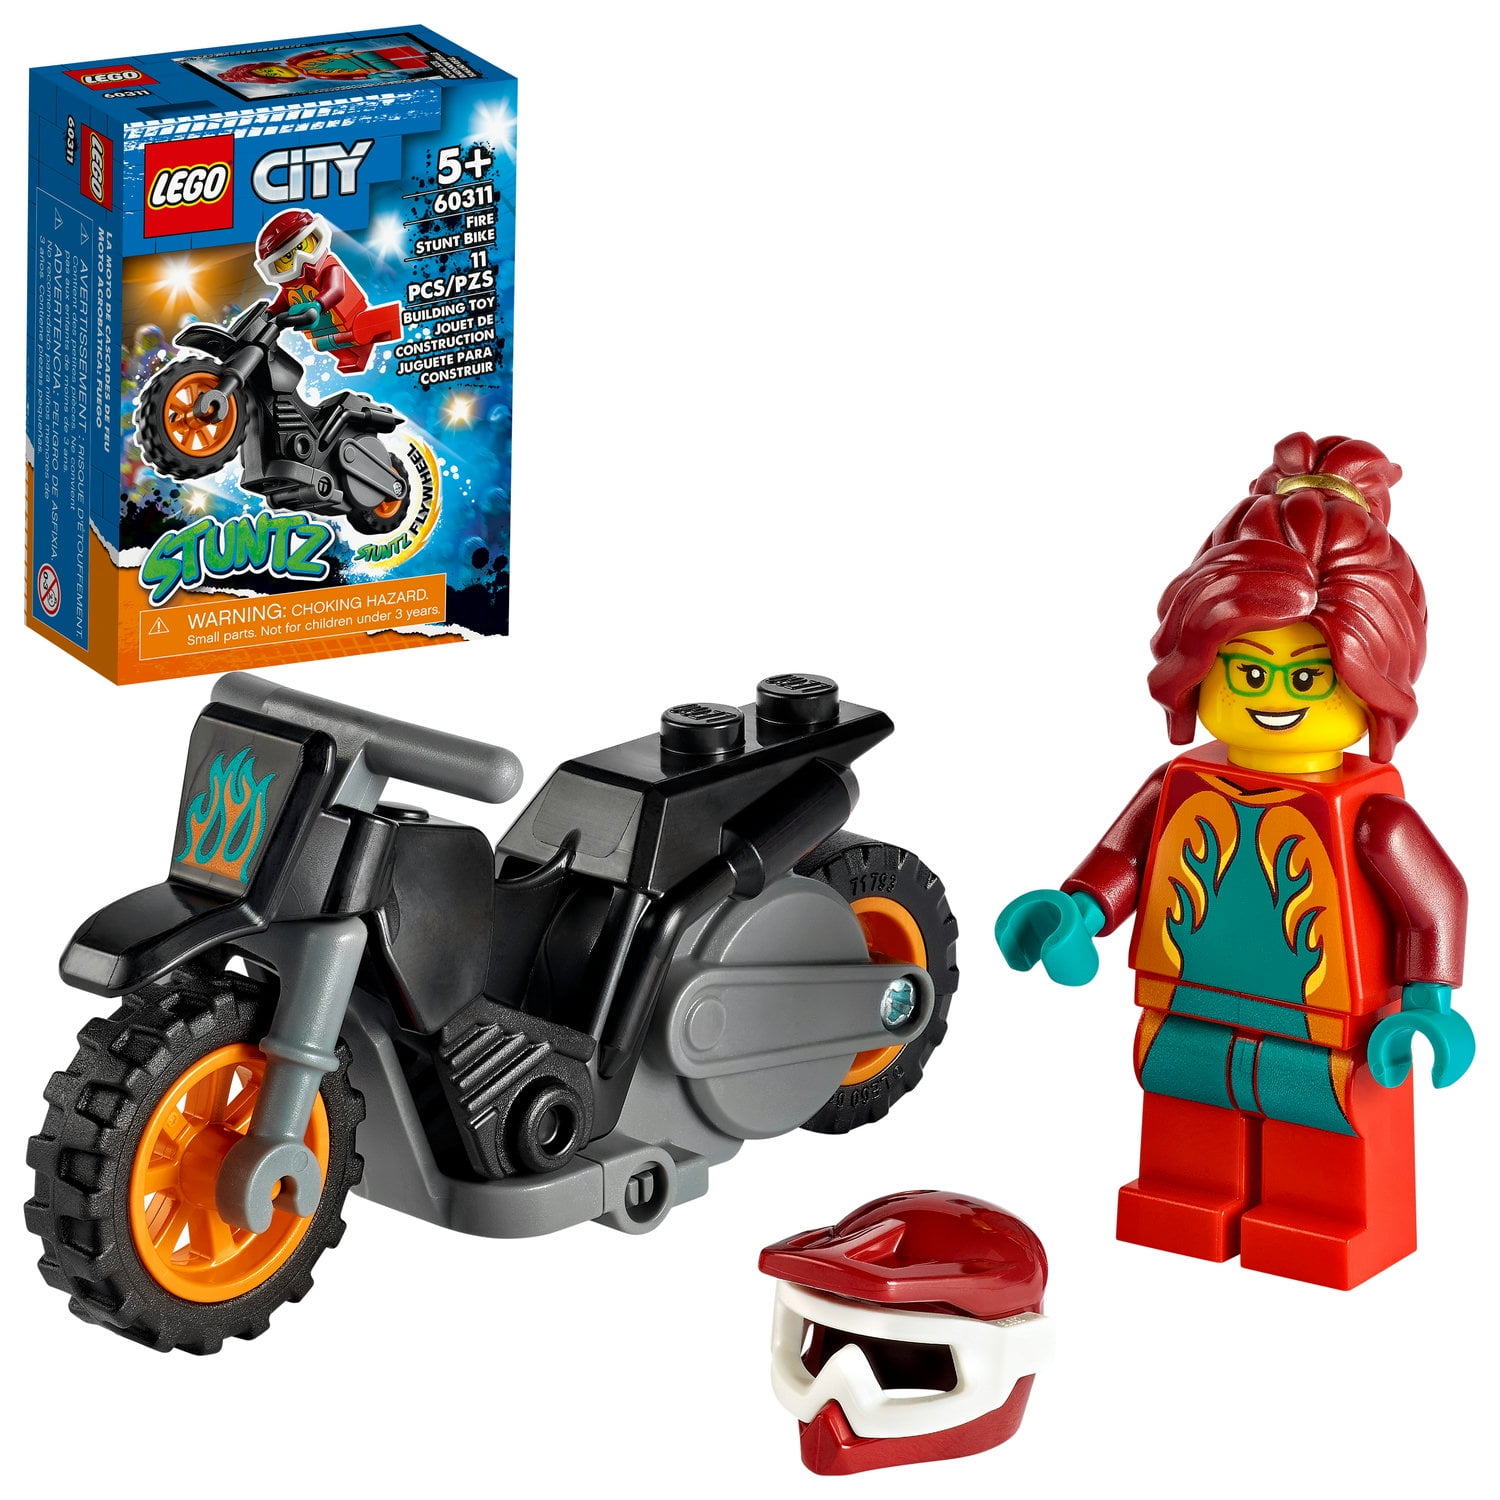 Aap onhandig Blauwe plek LEGO City Stuntz Fire Stunt Bike 60311 - Walmart.com